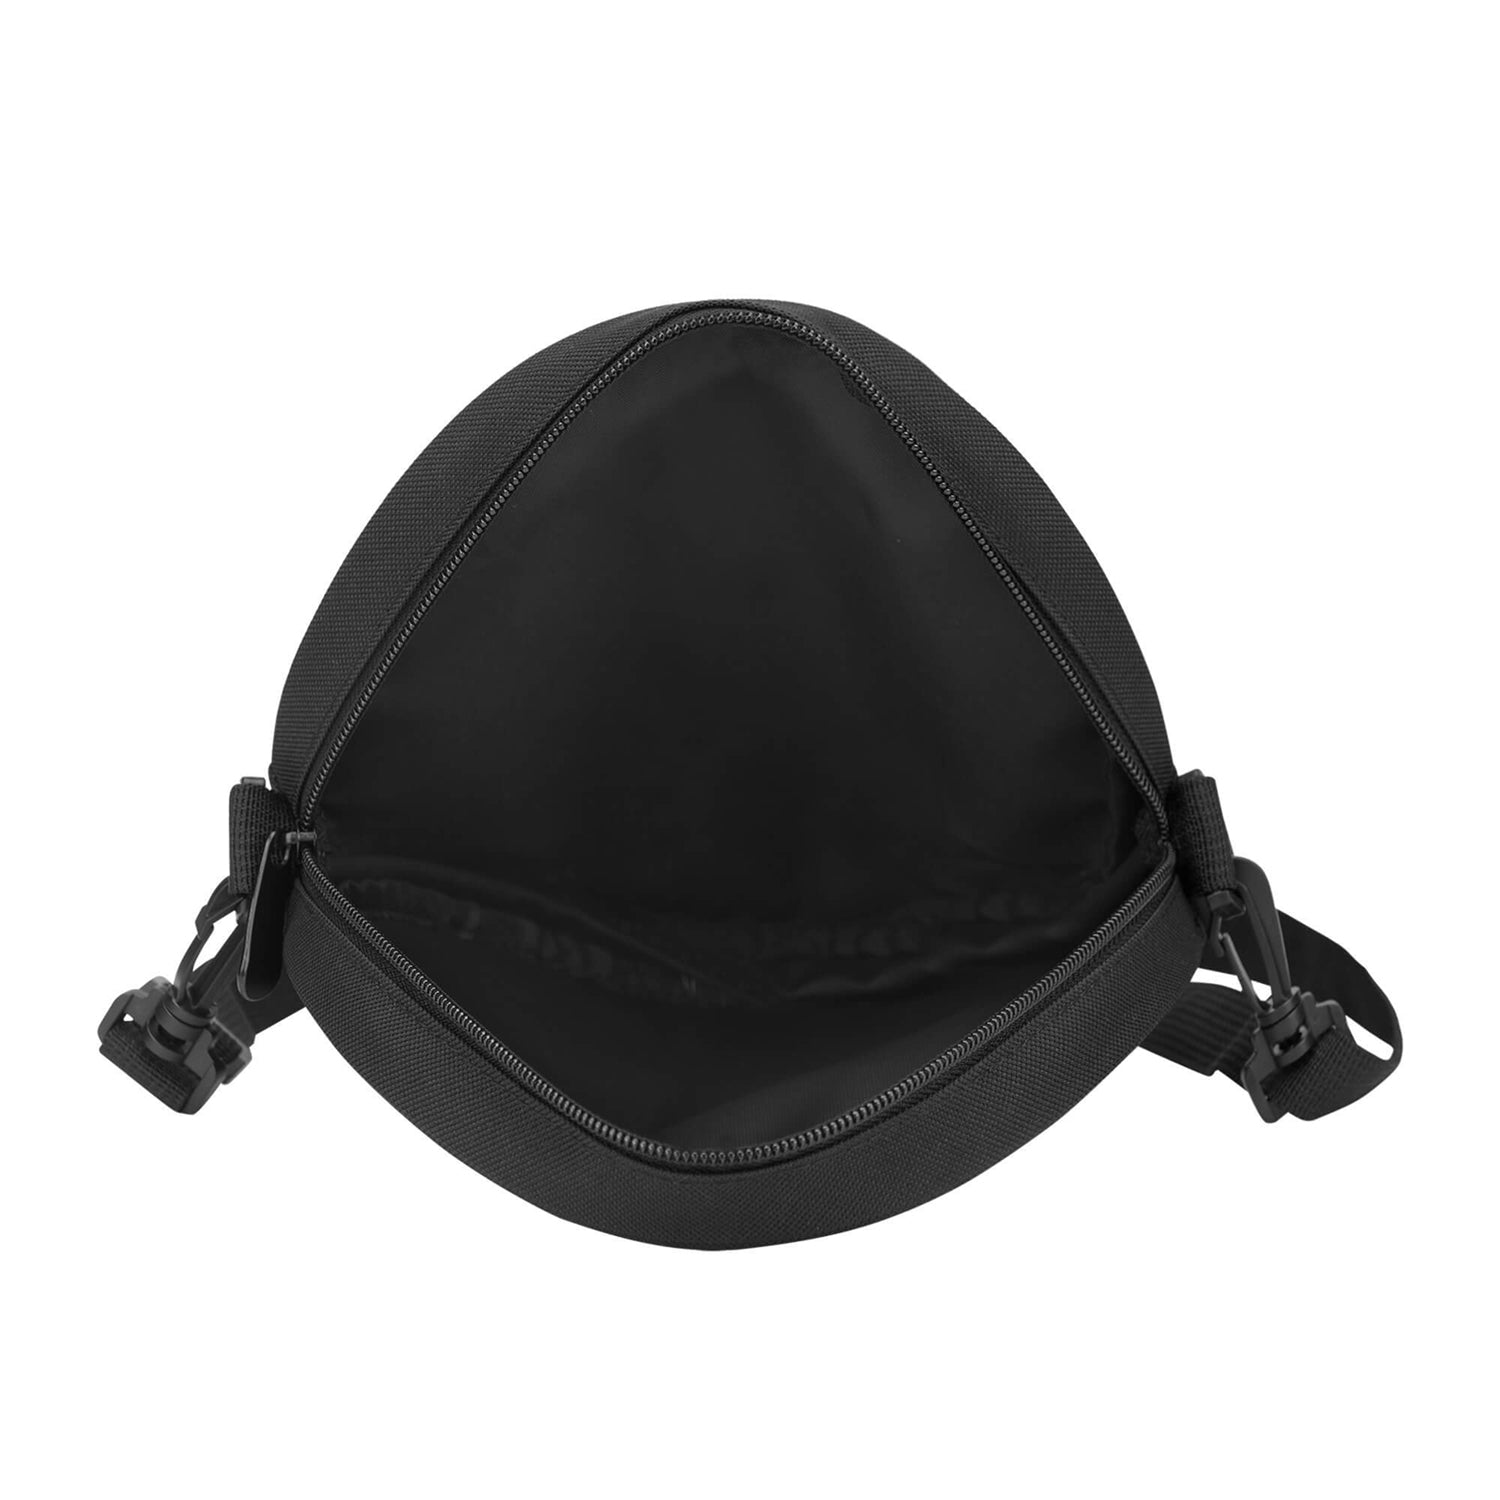 longford-tartan-round-satchel-bags